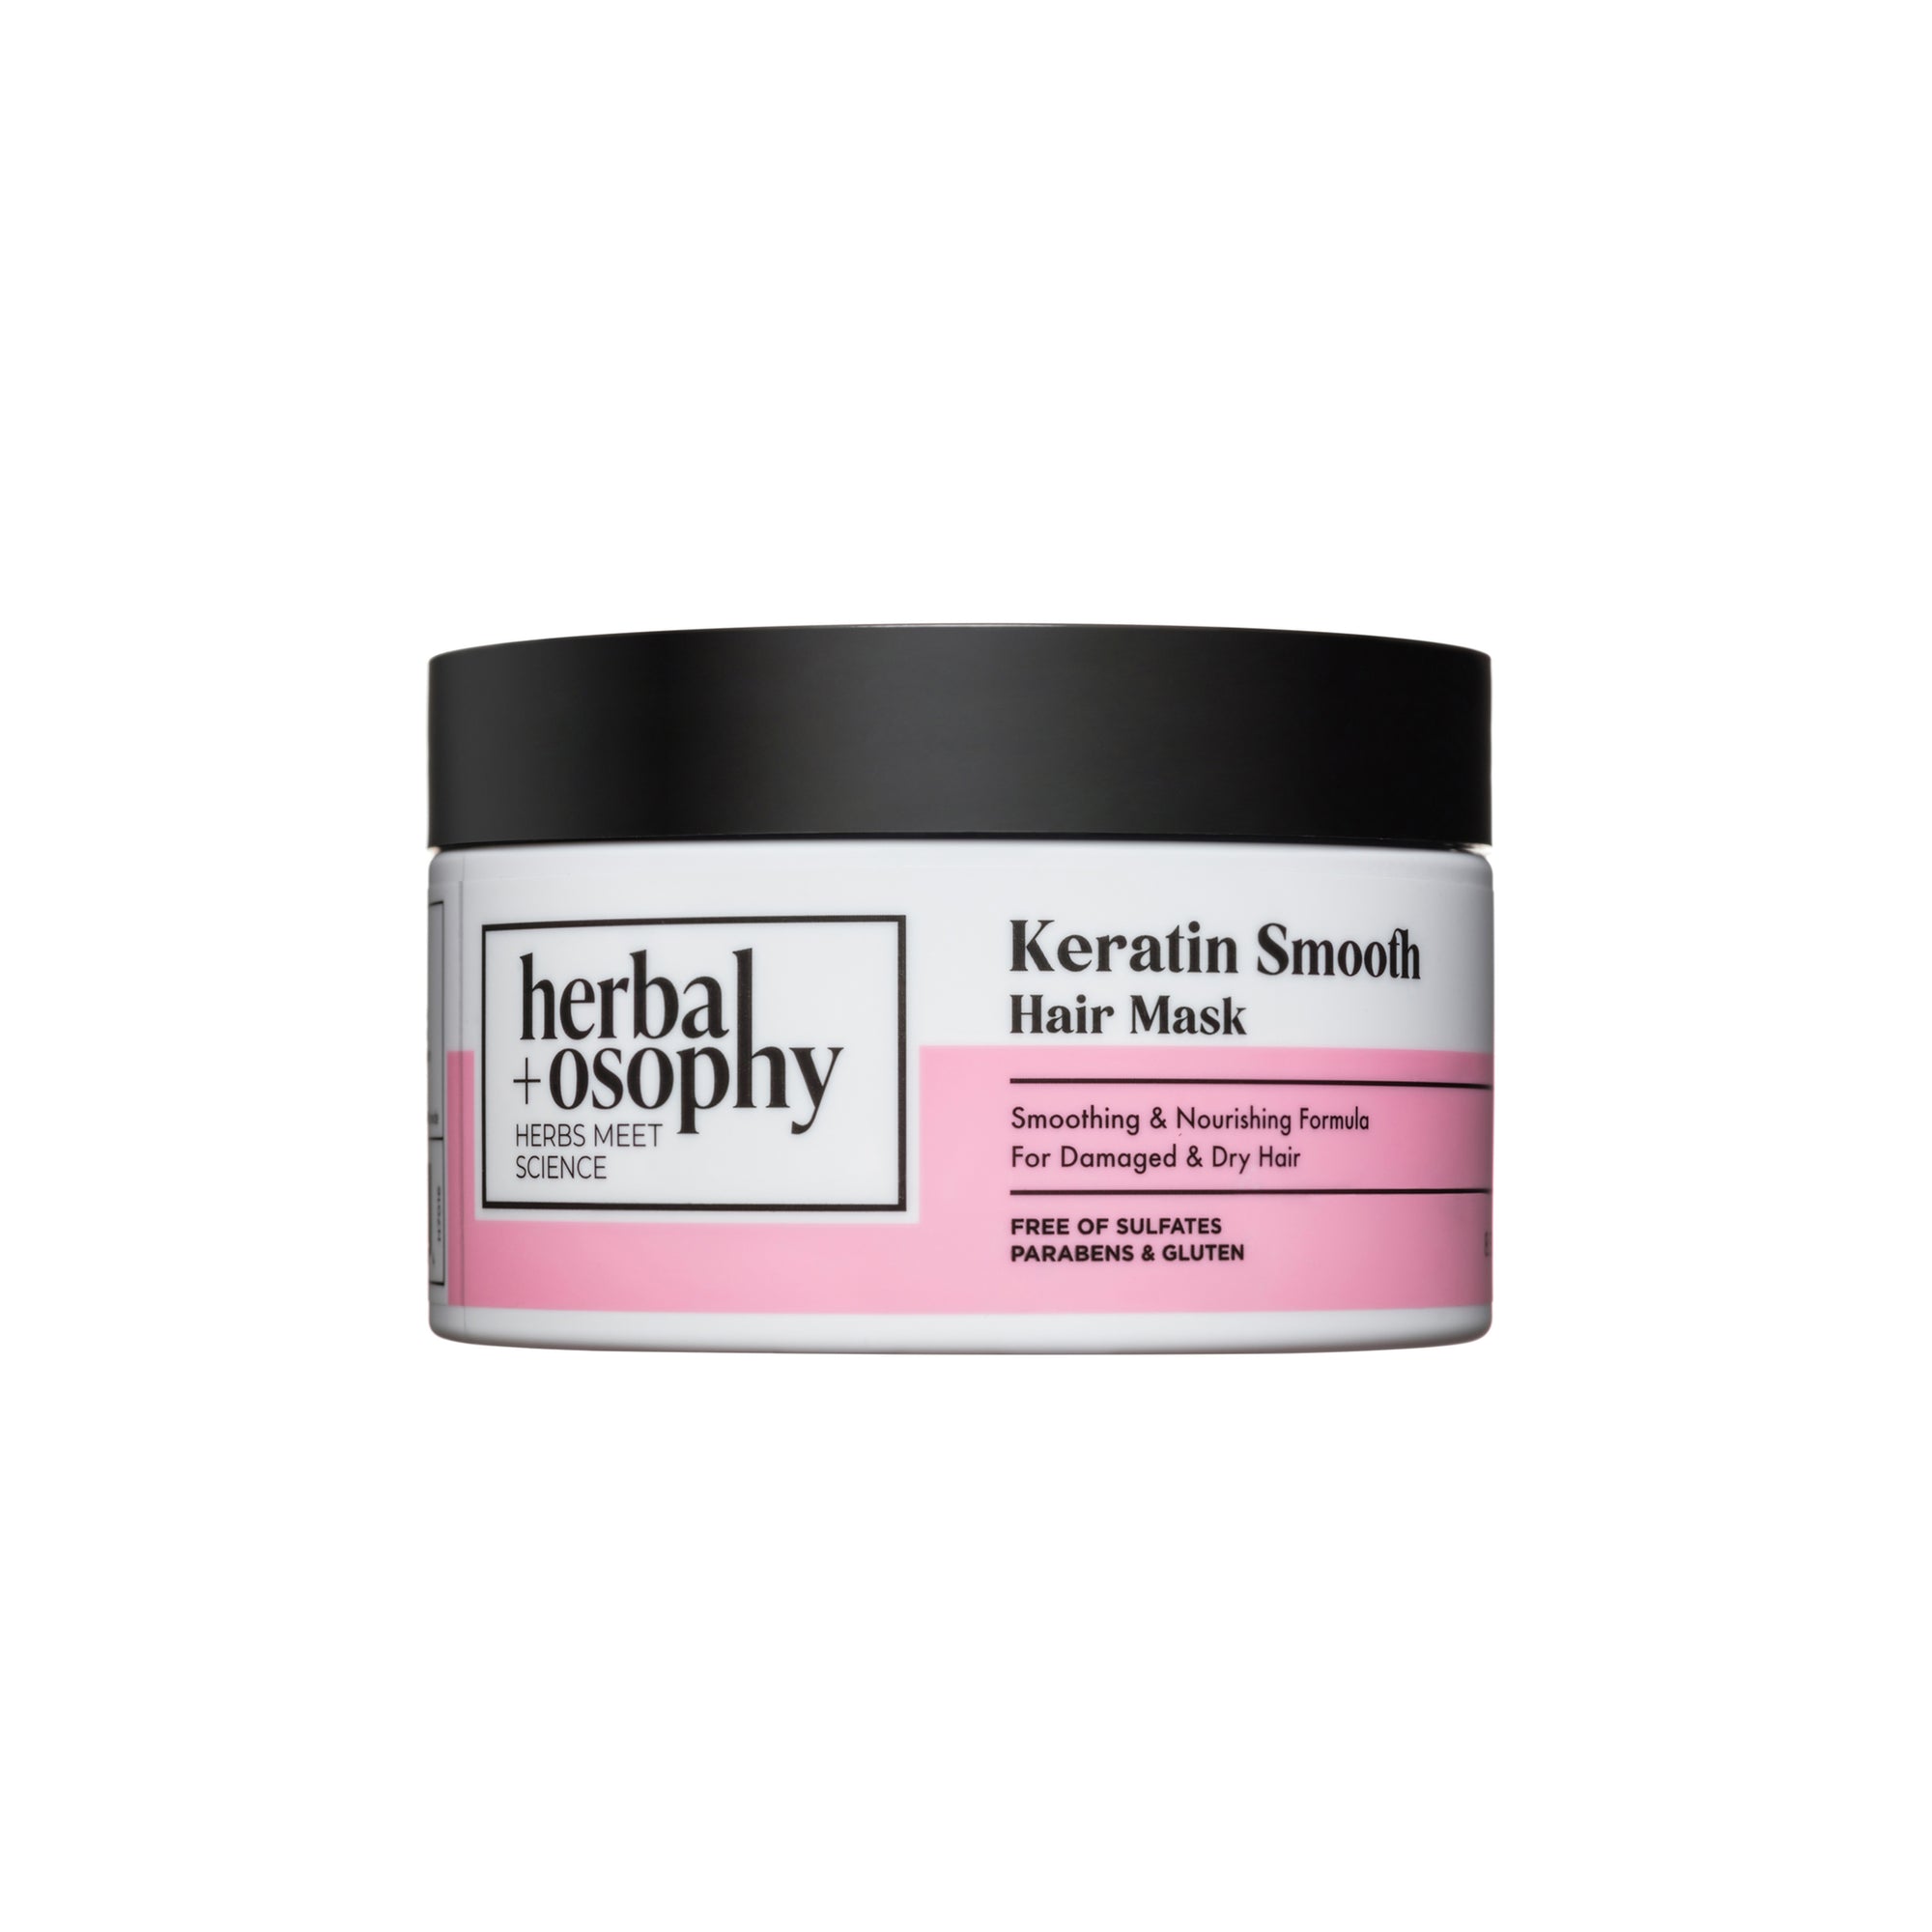 Herbalosophy Keratin Smooth Hair Mask jar front